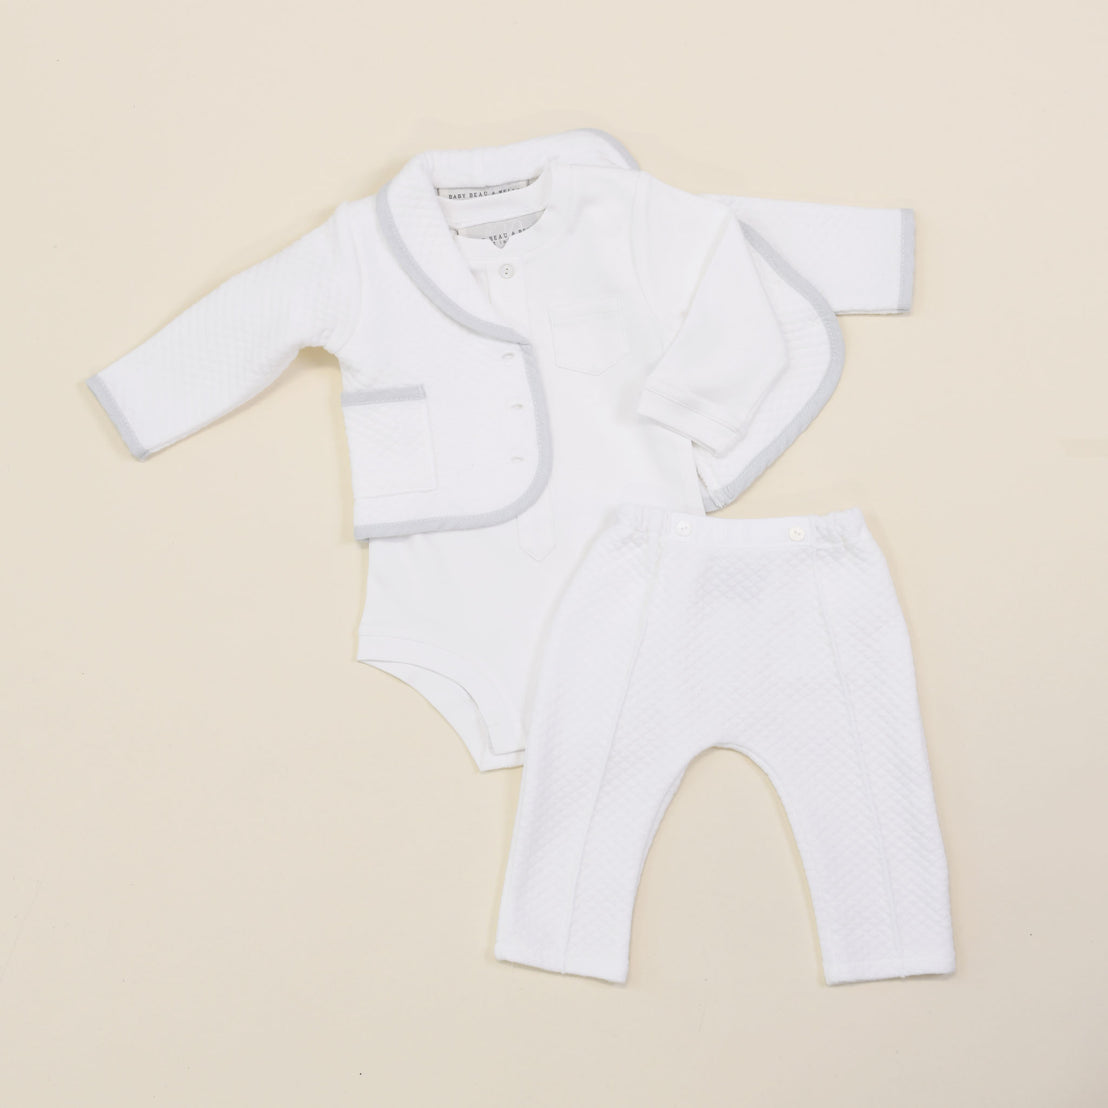 Harrison Quilted Newborn Suit